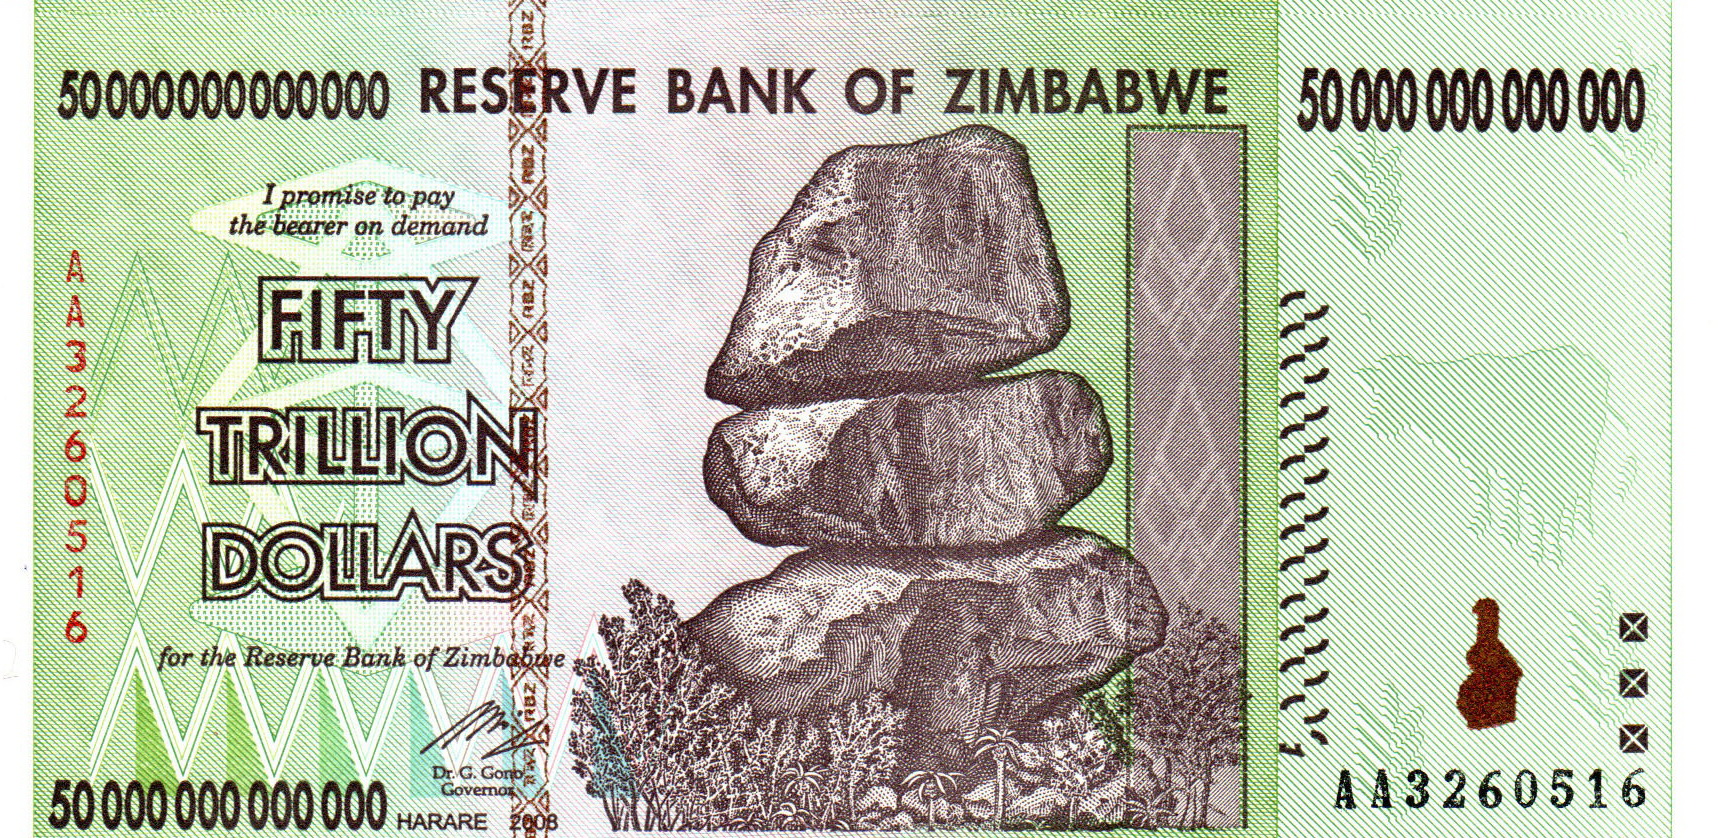 Zimbabwe_$50_000_000_000_000_2008_Obverse.jpg